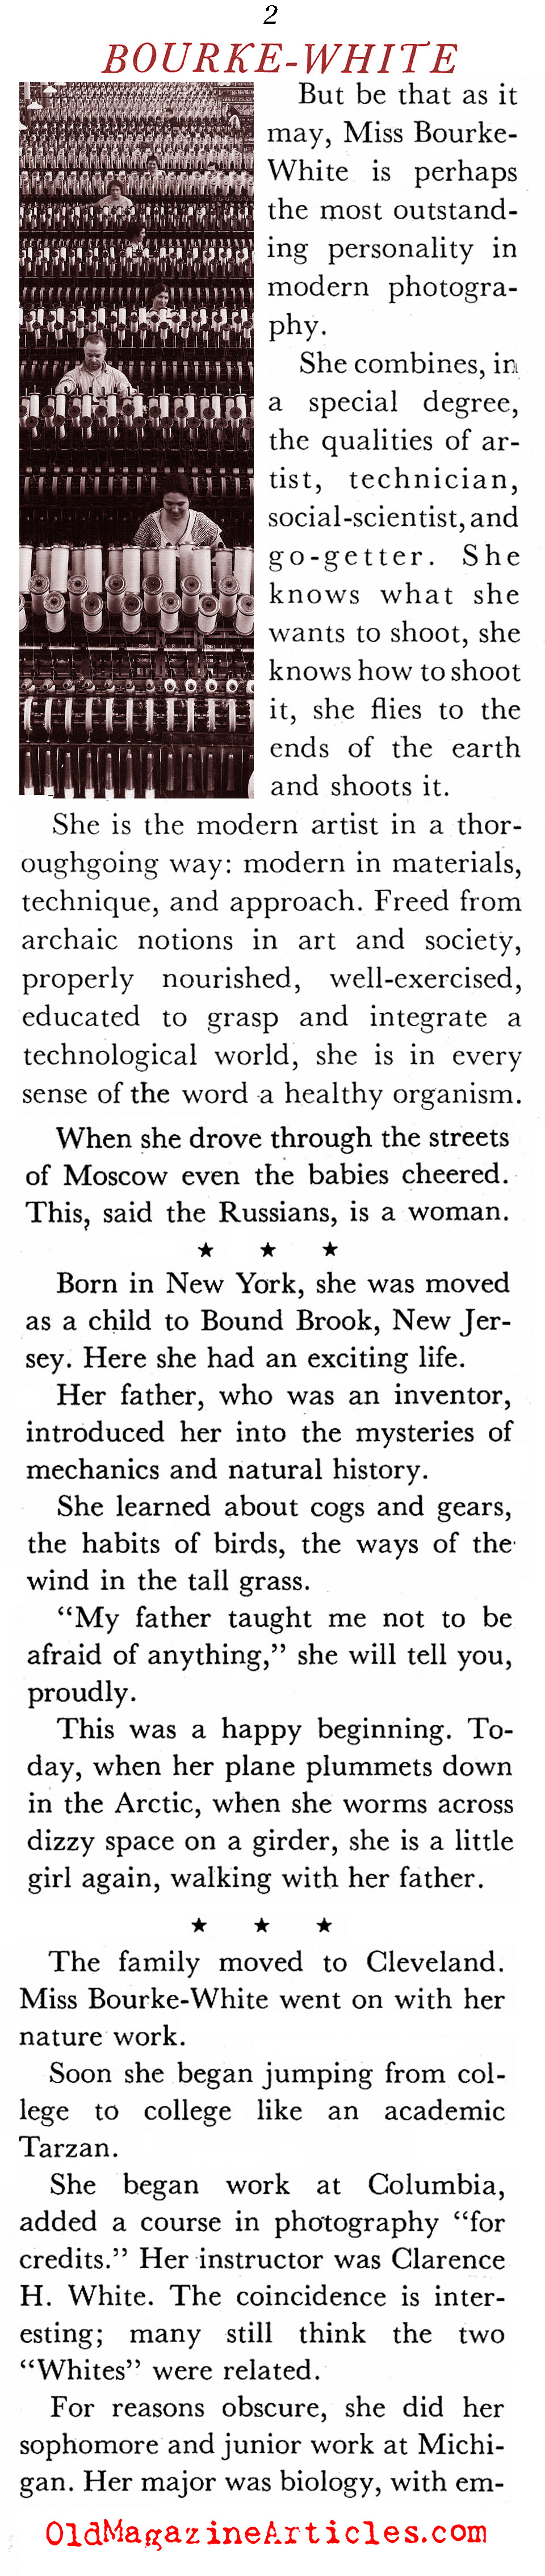 Margaret Bourke-White (Coronet Magazine, 1939)